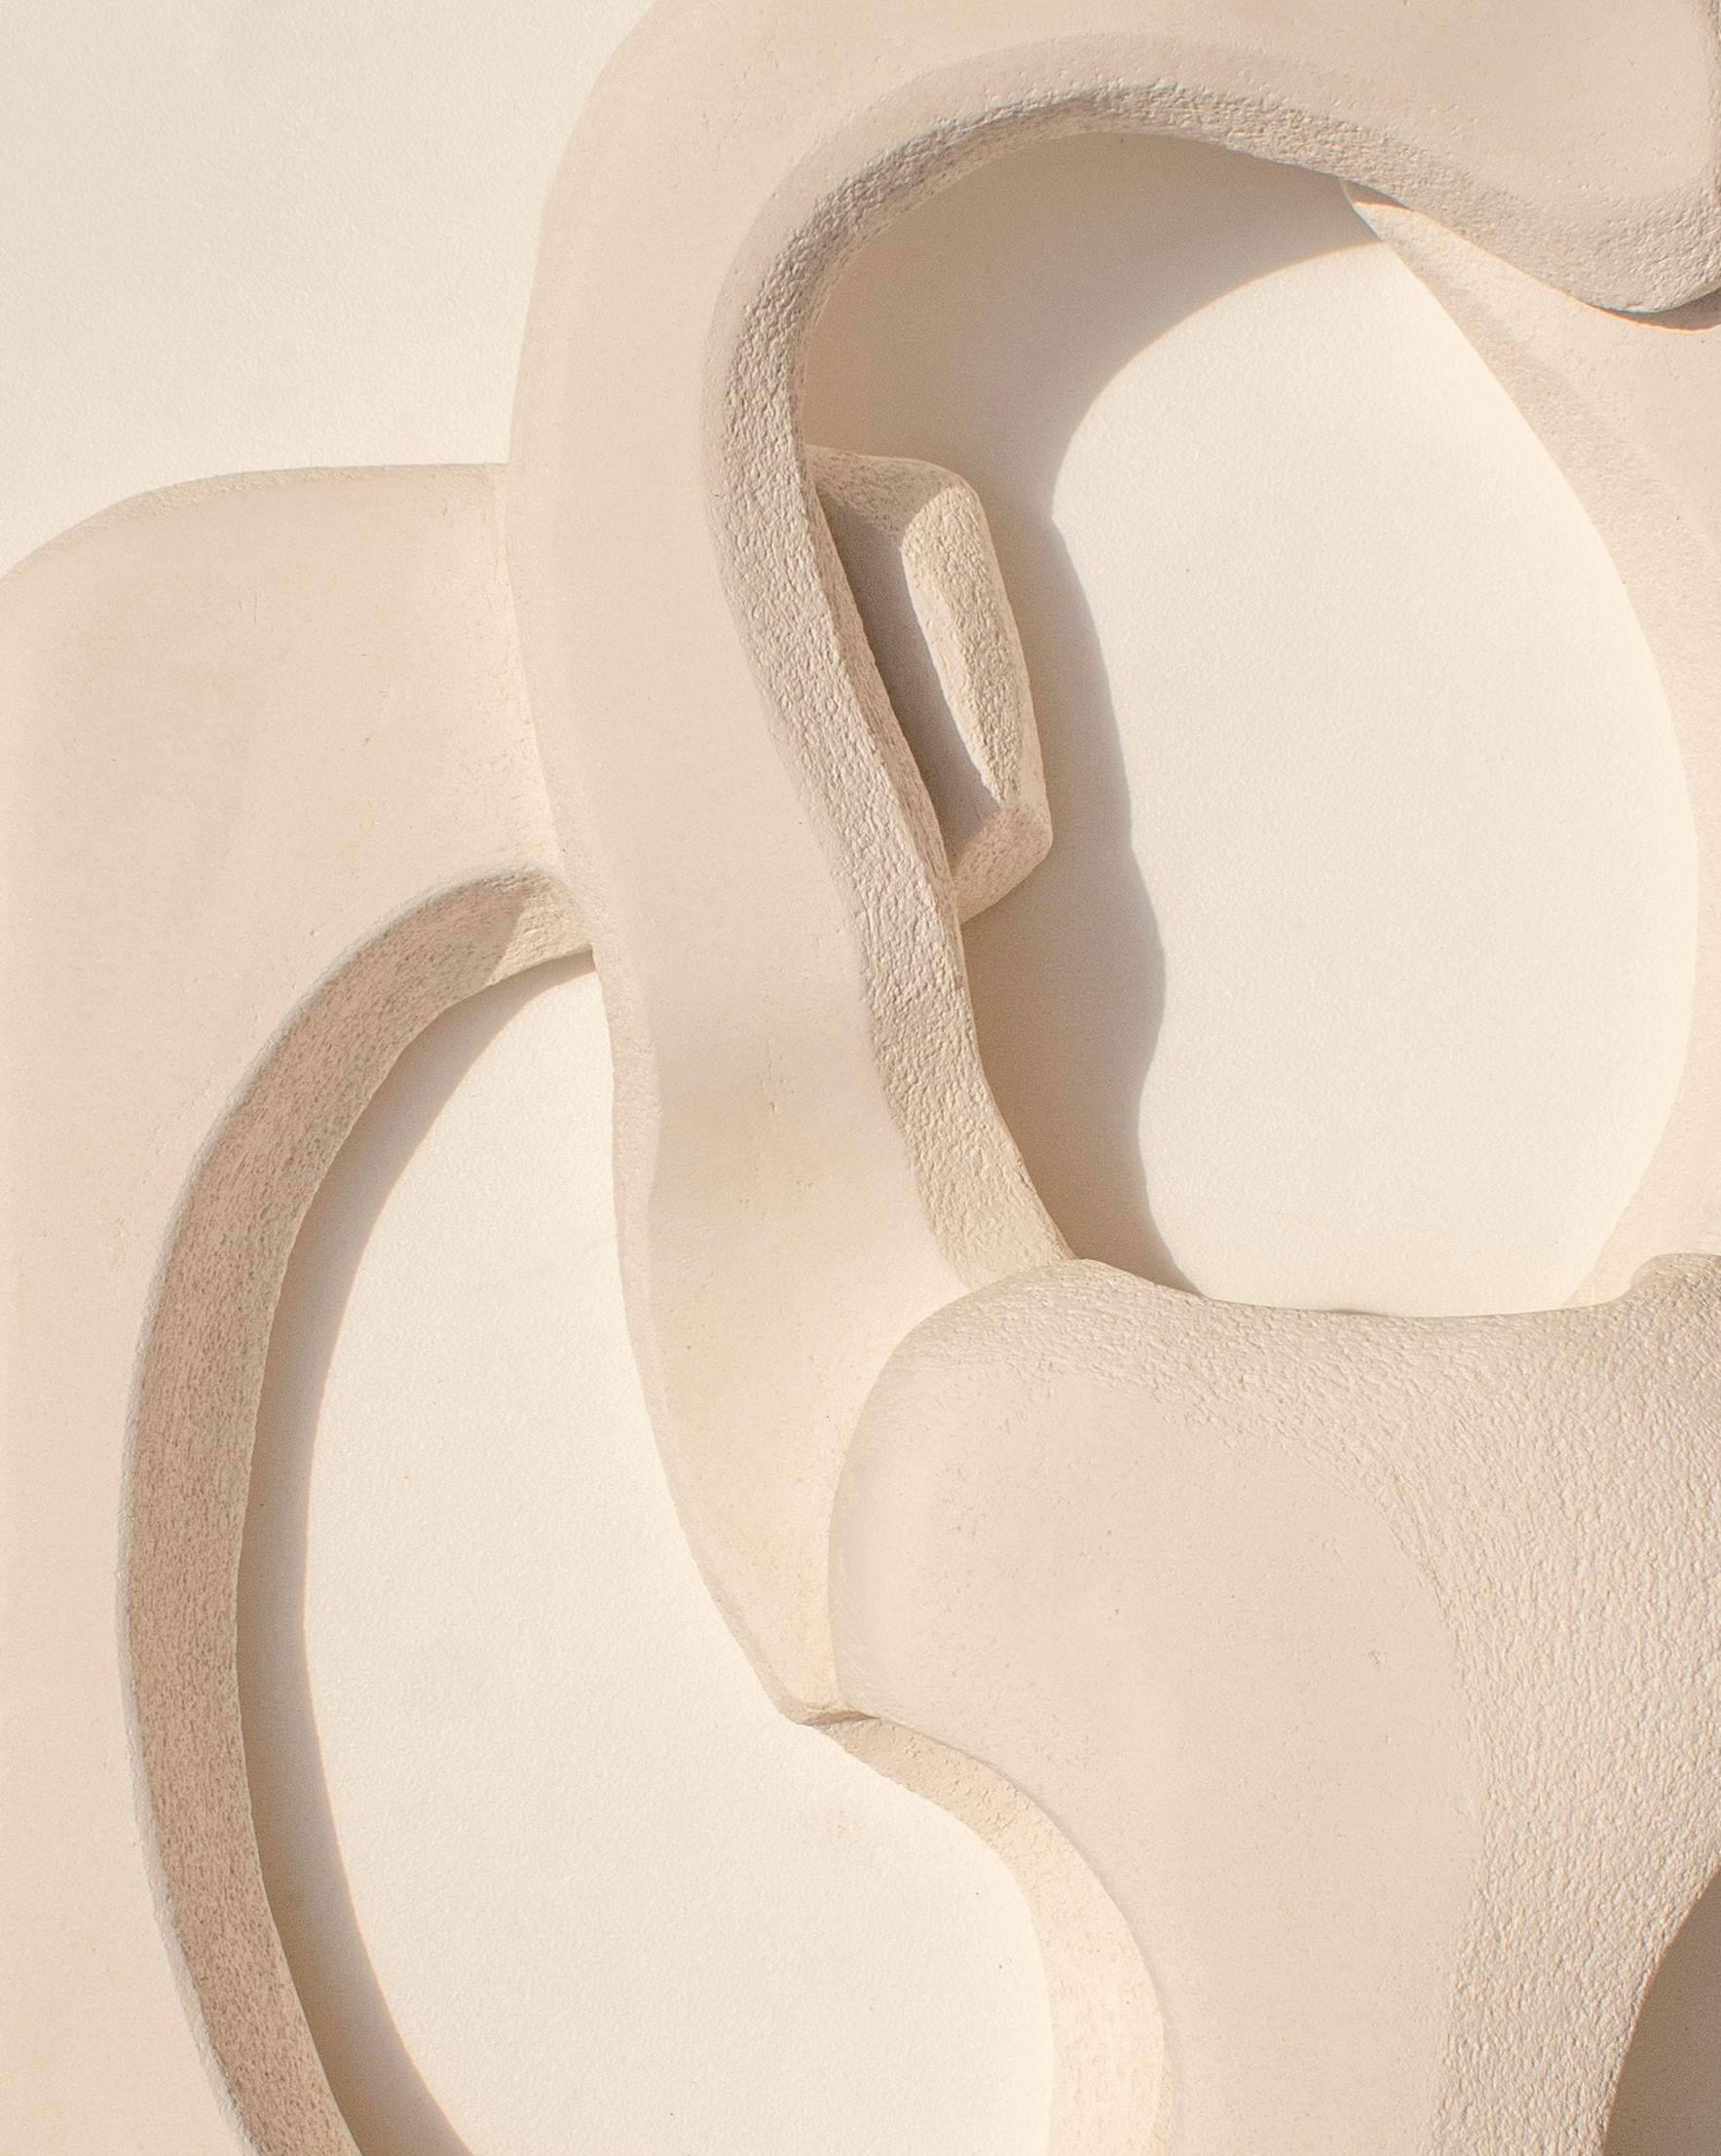 Organic Modern Contemporary Ceramic Wall Sconce Handmade Sculptural Light 